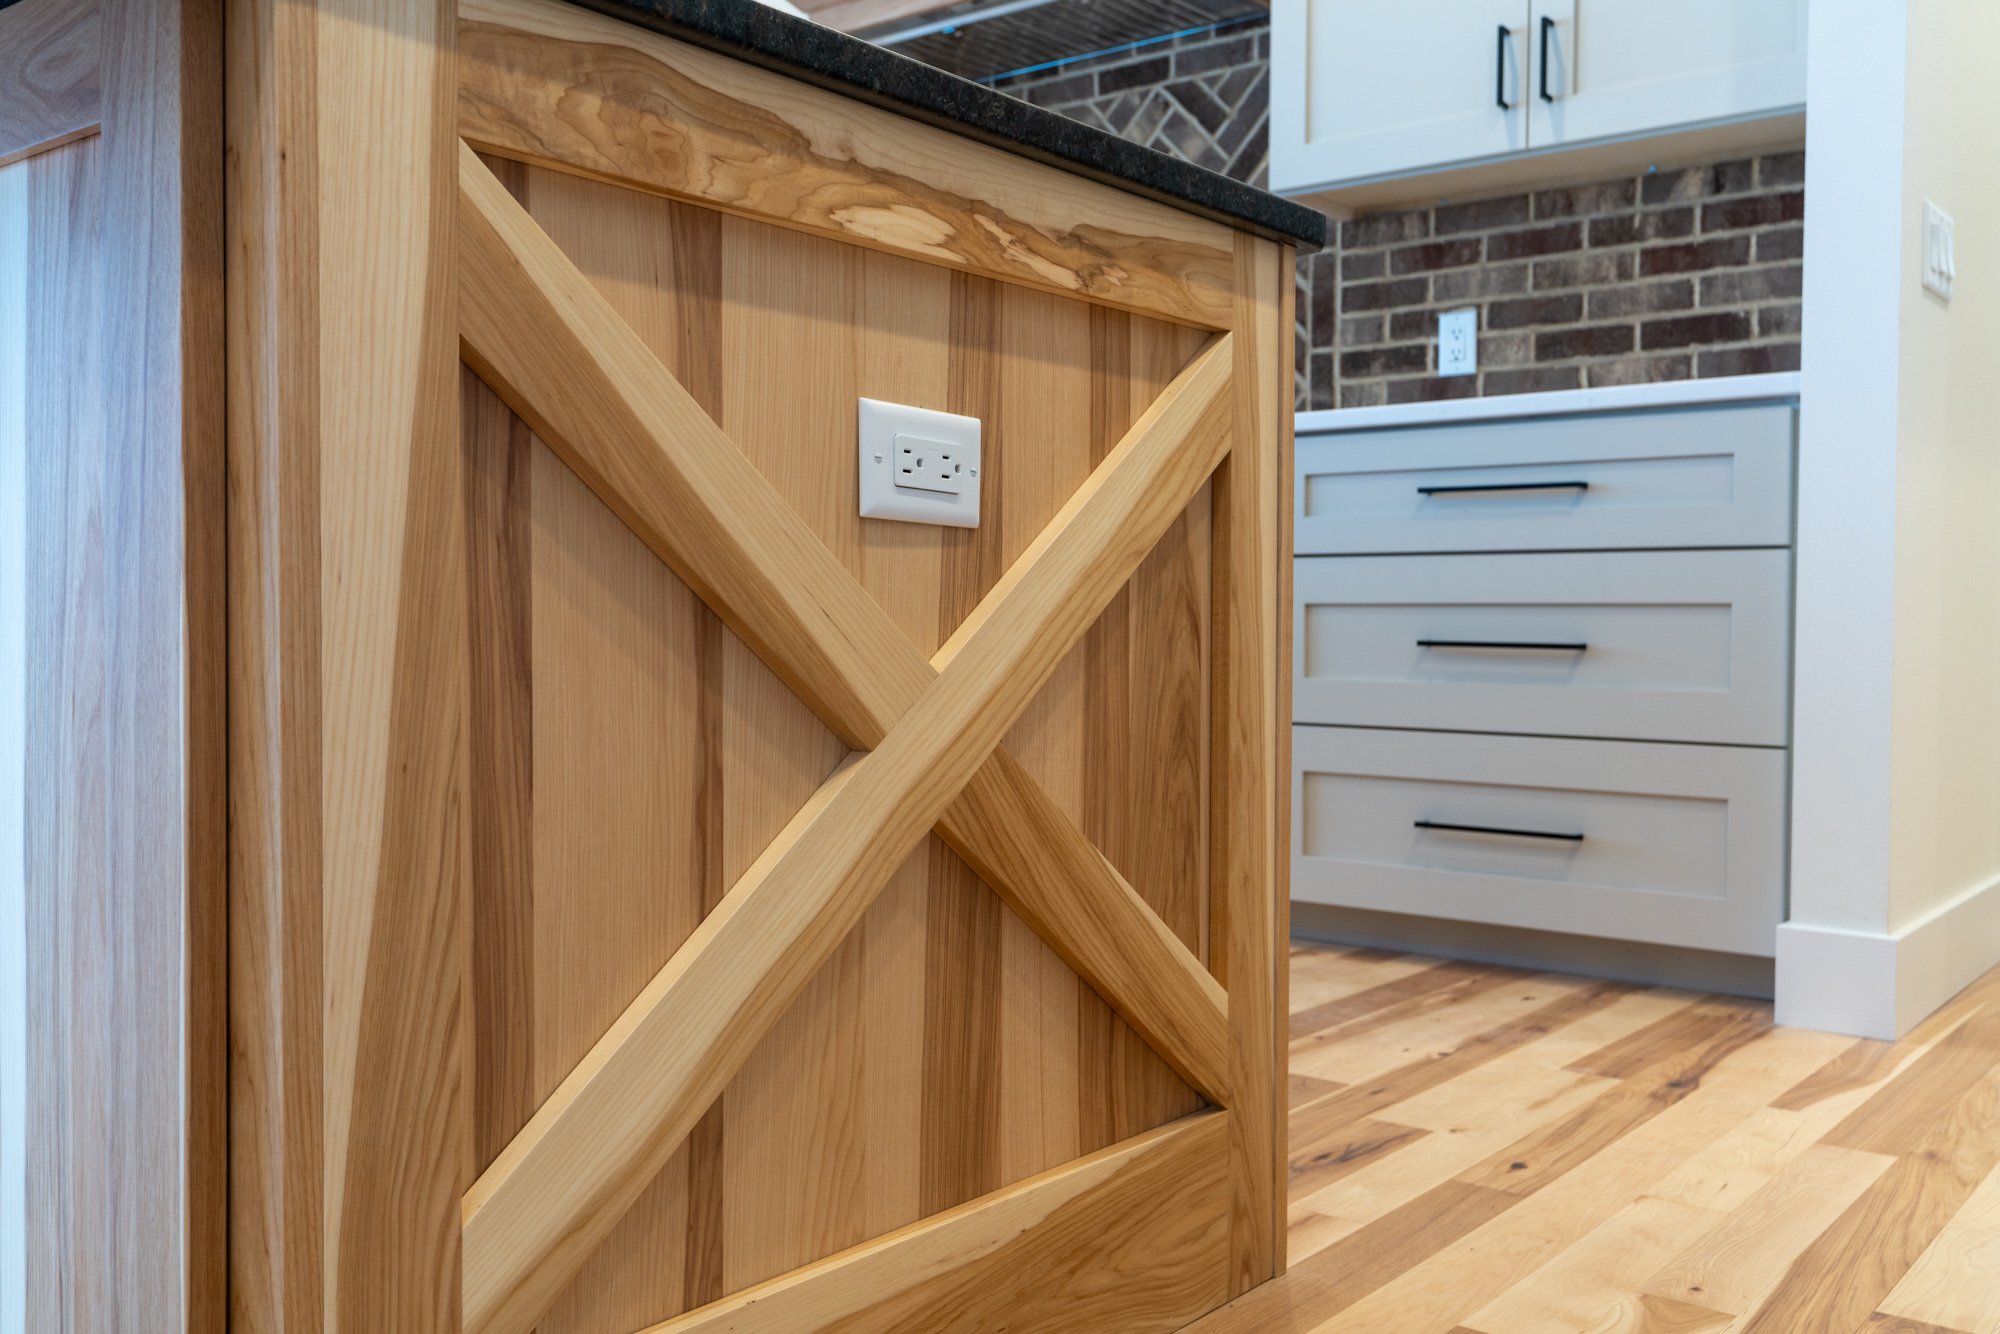 Wood details on kitchen cabinets